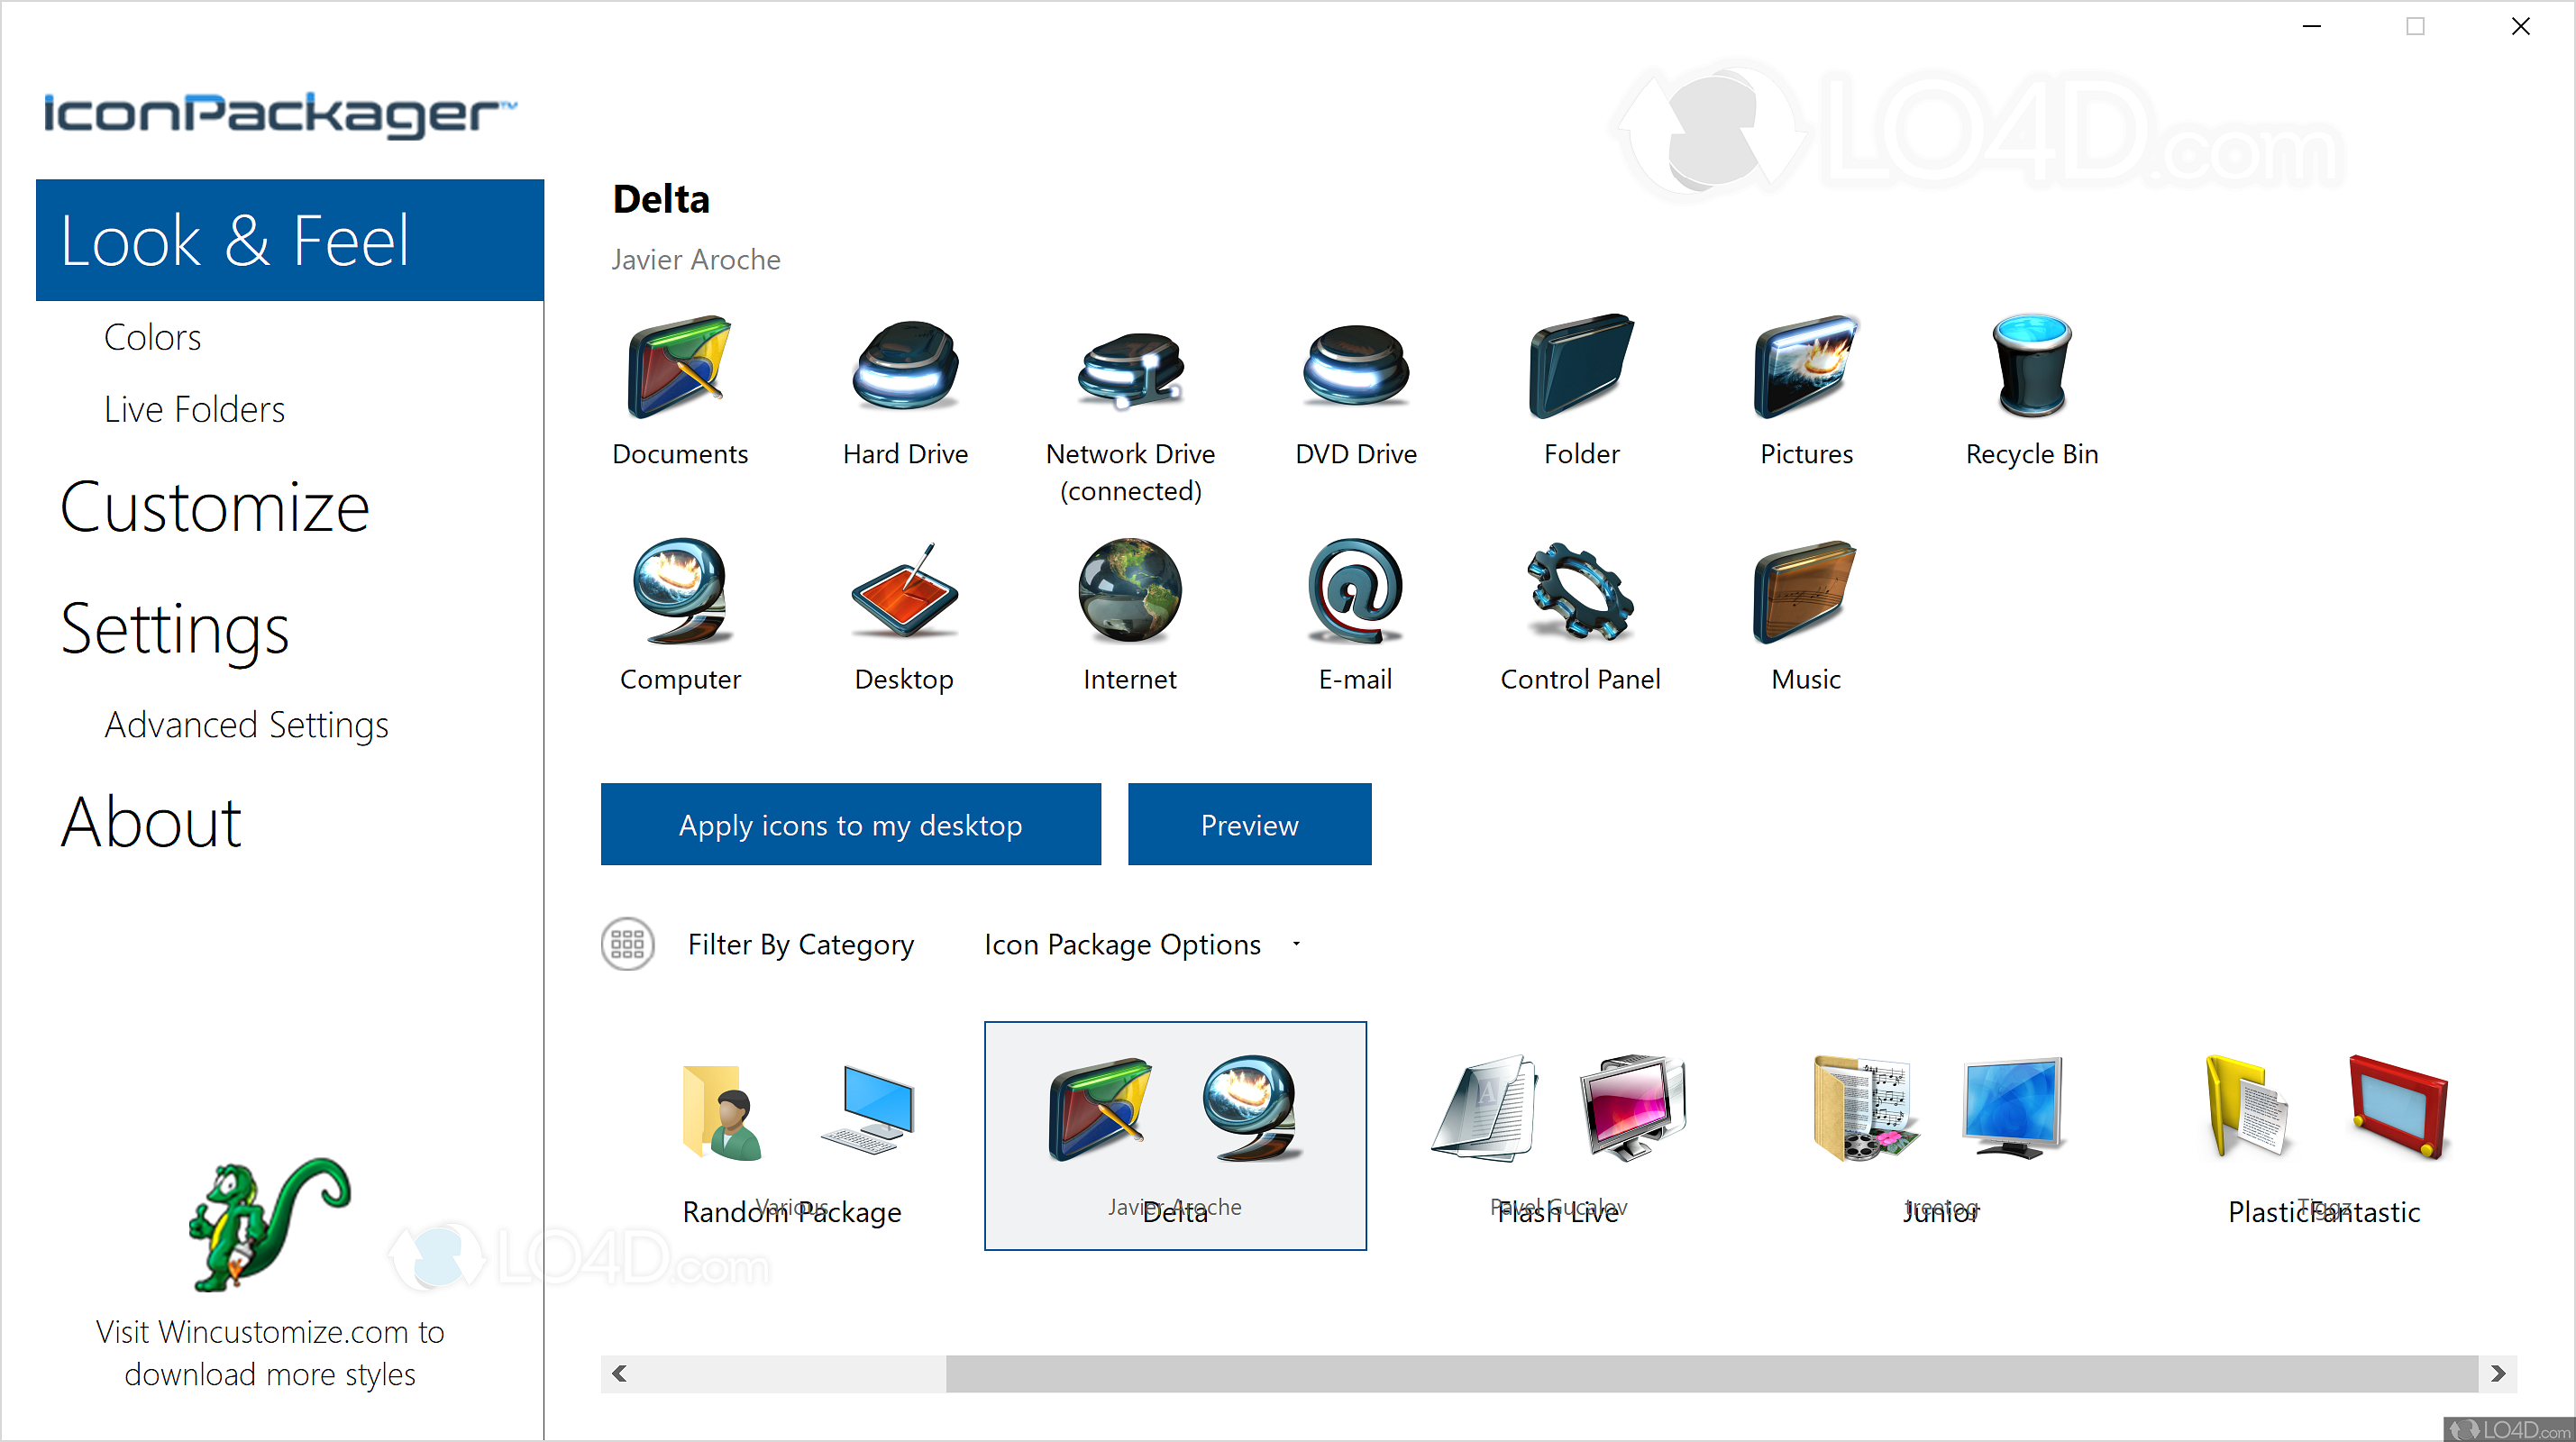 DesktopOK x64 10.88 download the new version for windows